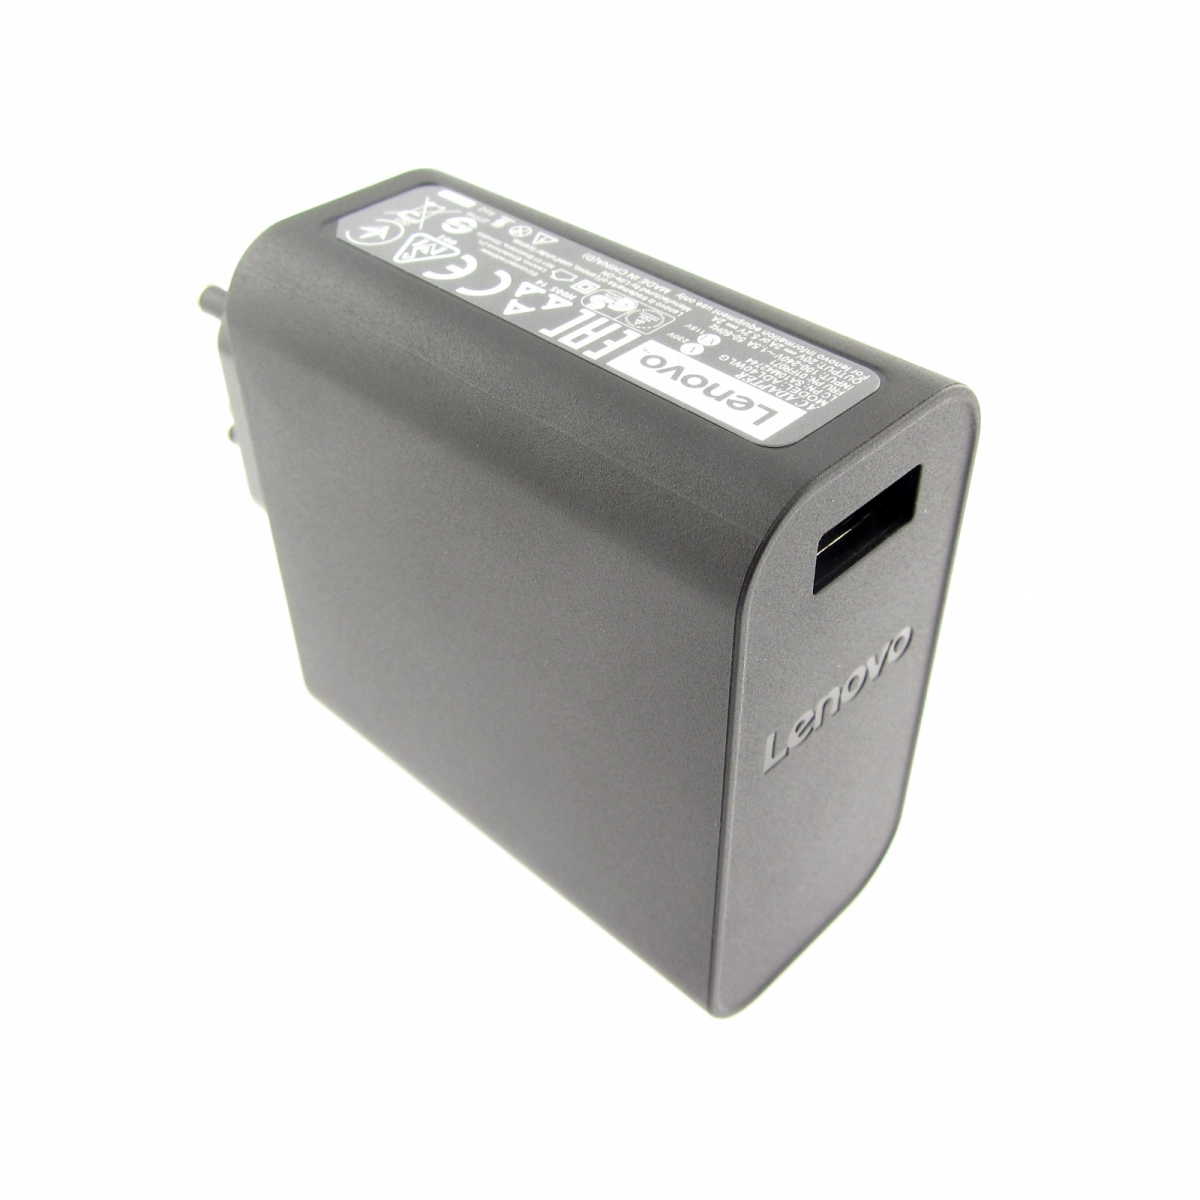 Original Netzteil für LENOVO ADL40WLF 36200577 36200578, 20V, 2A Stecker USB, ohne USB-Kabel